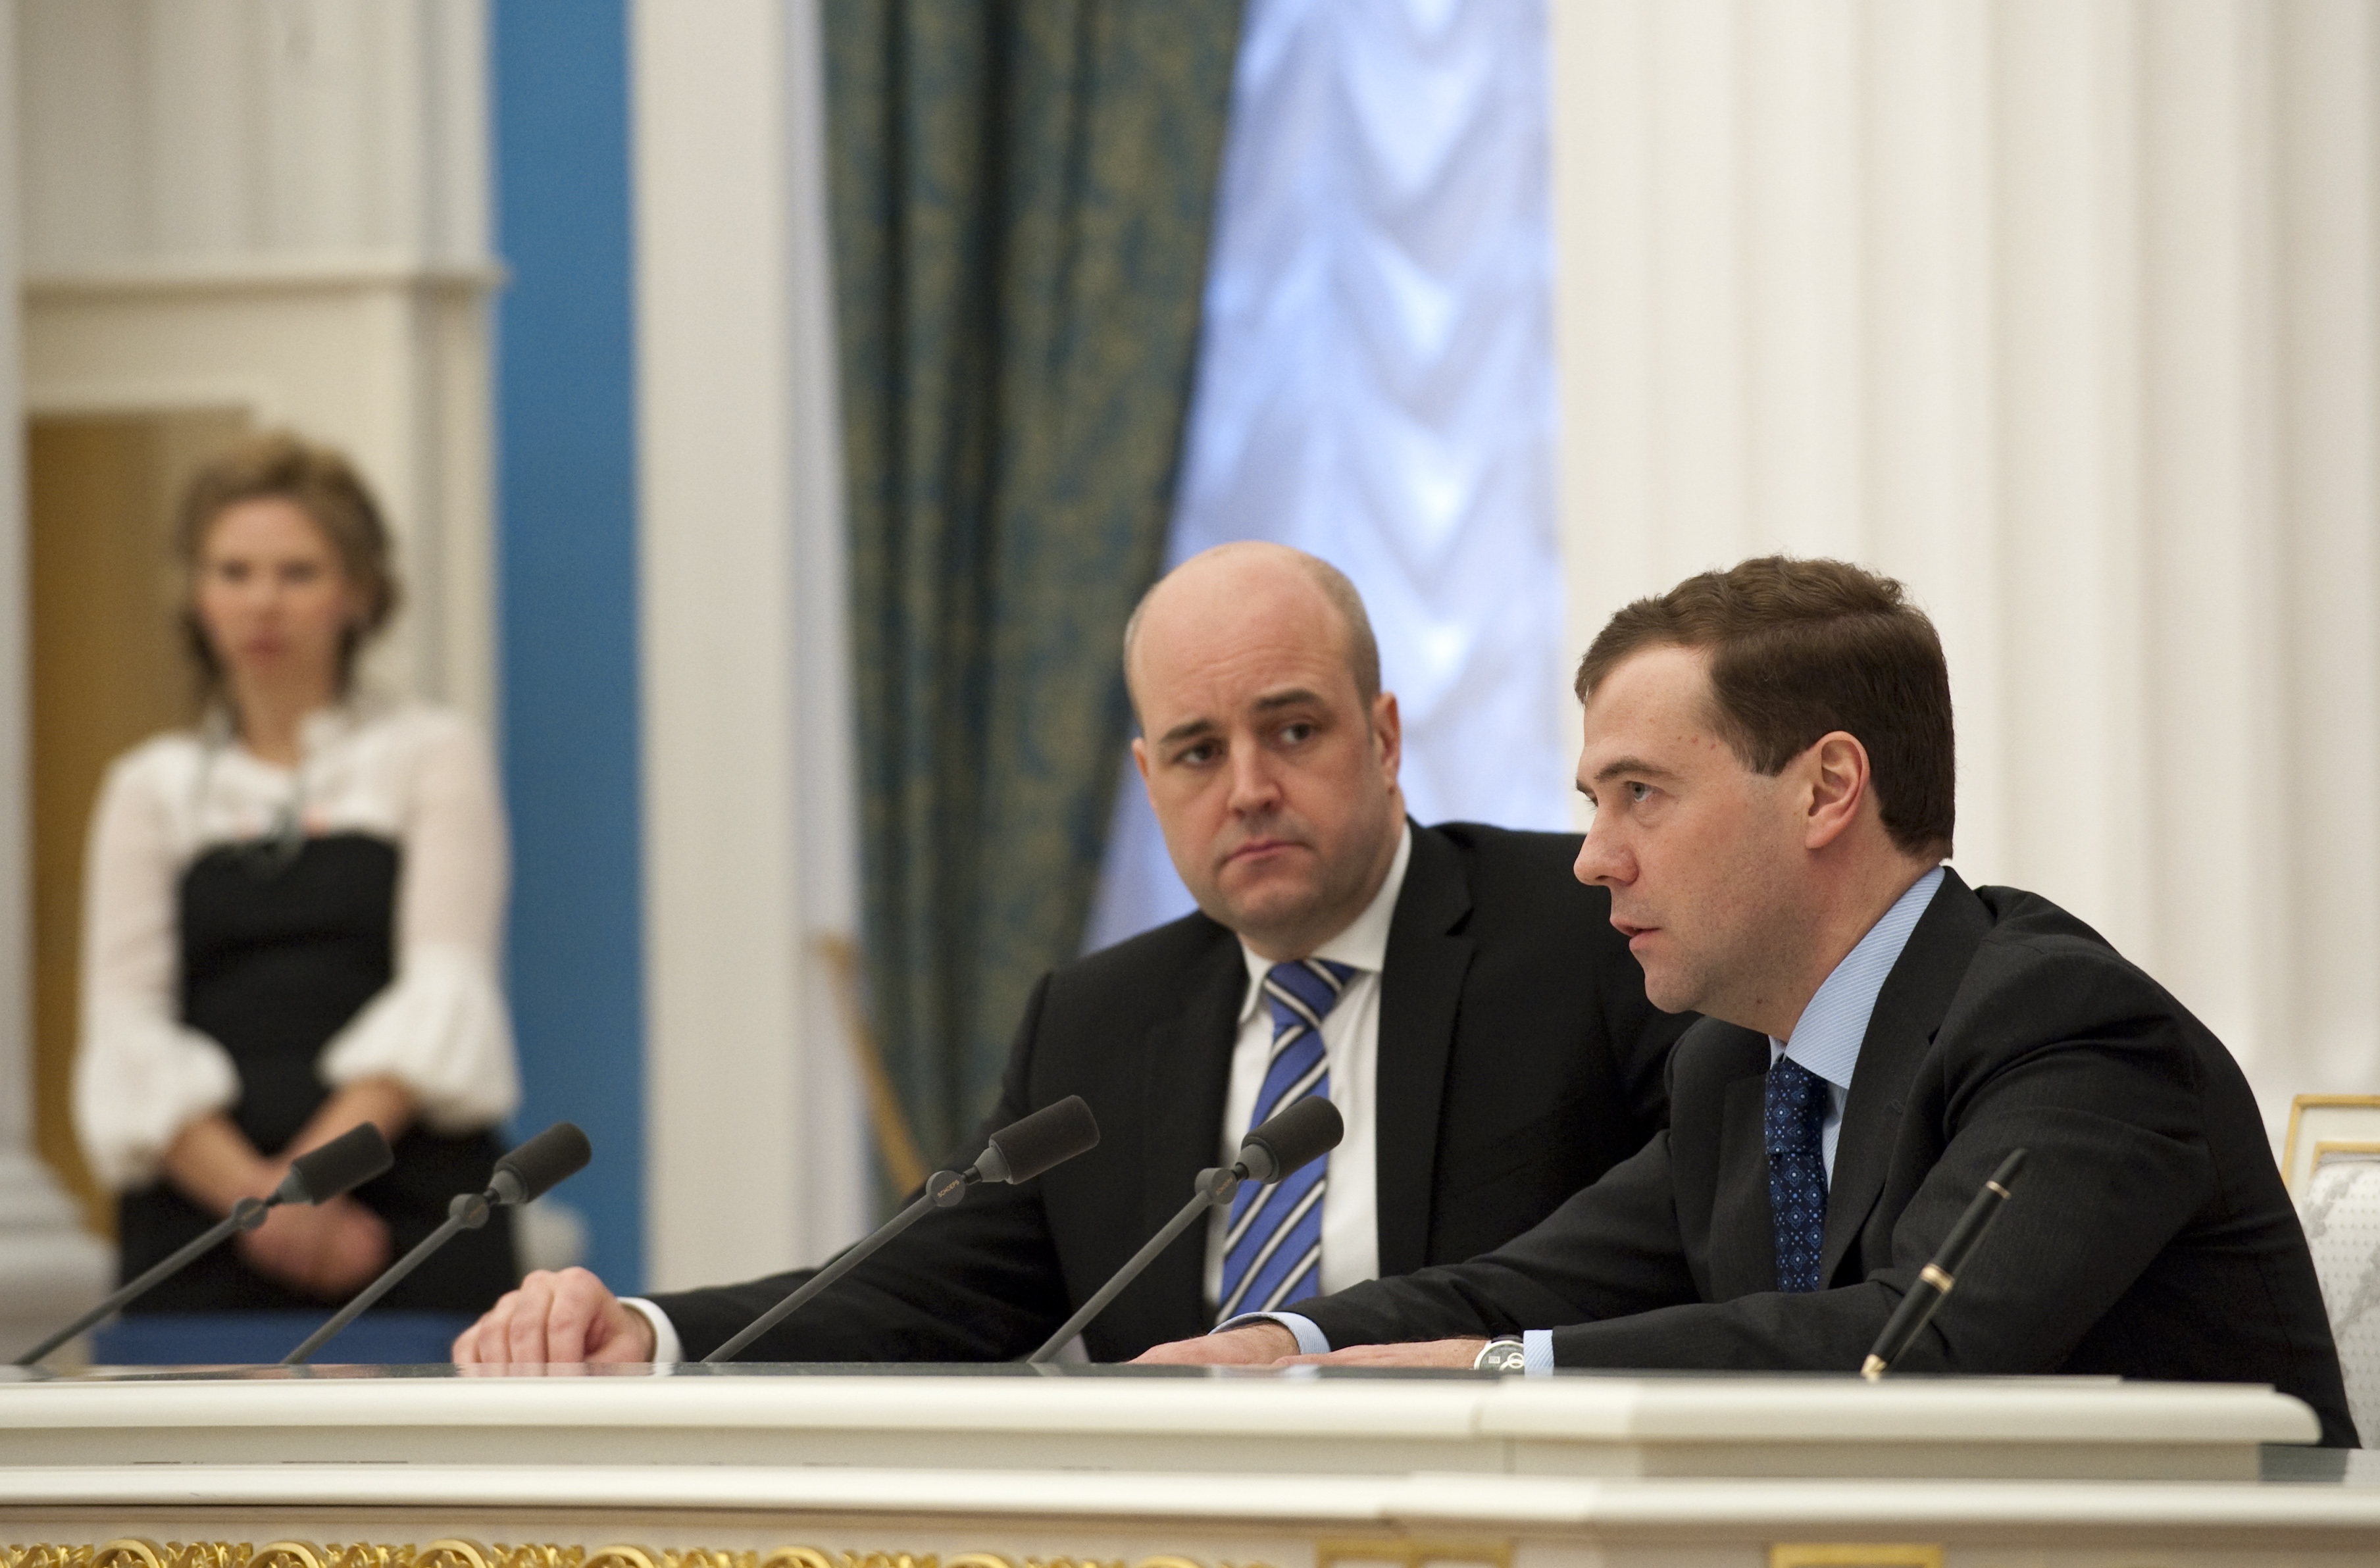 Medvedev: "Ni skyddar banditer." Reinfeldt: "Say what?"